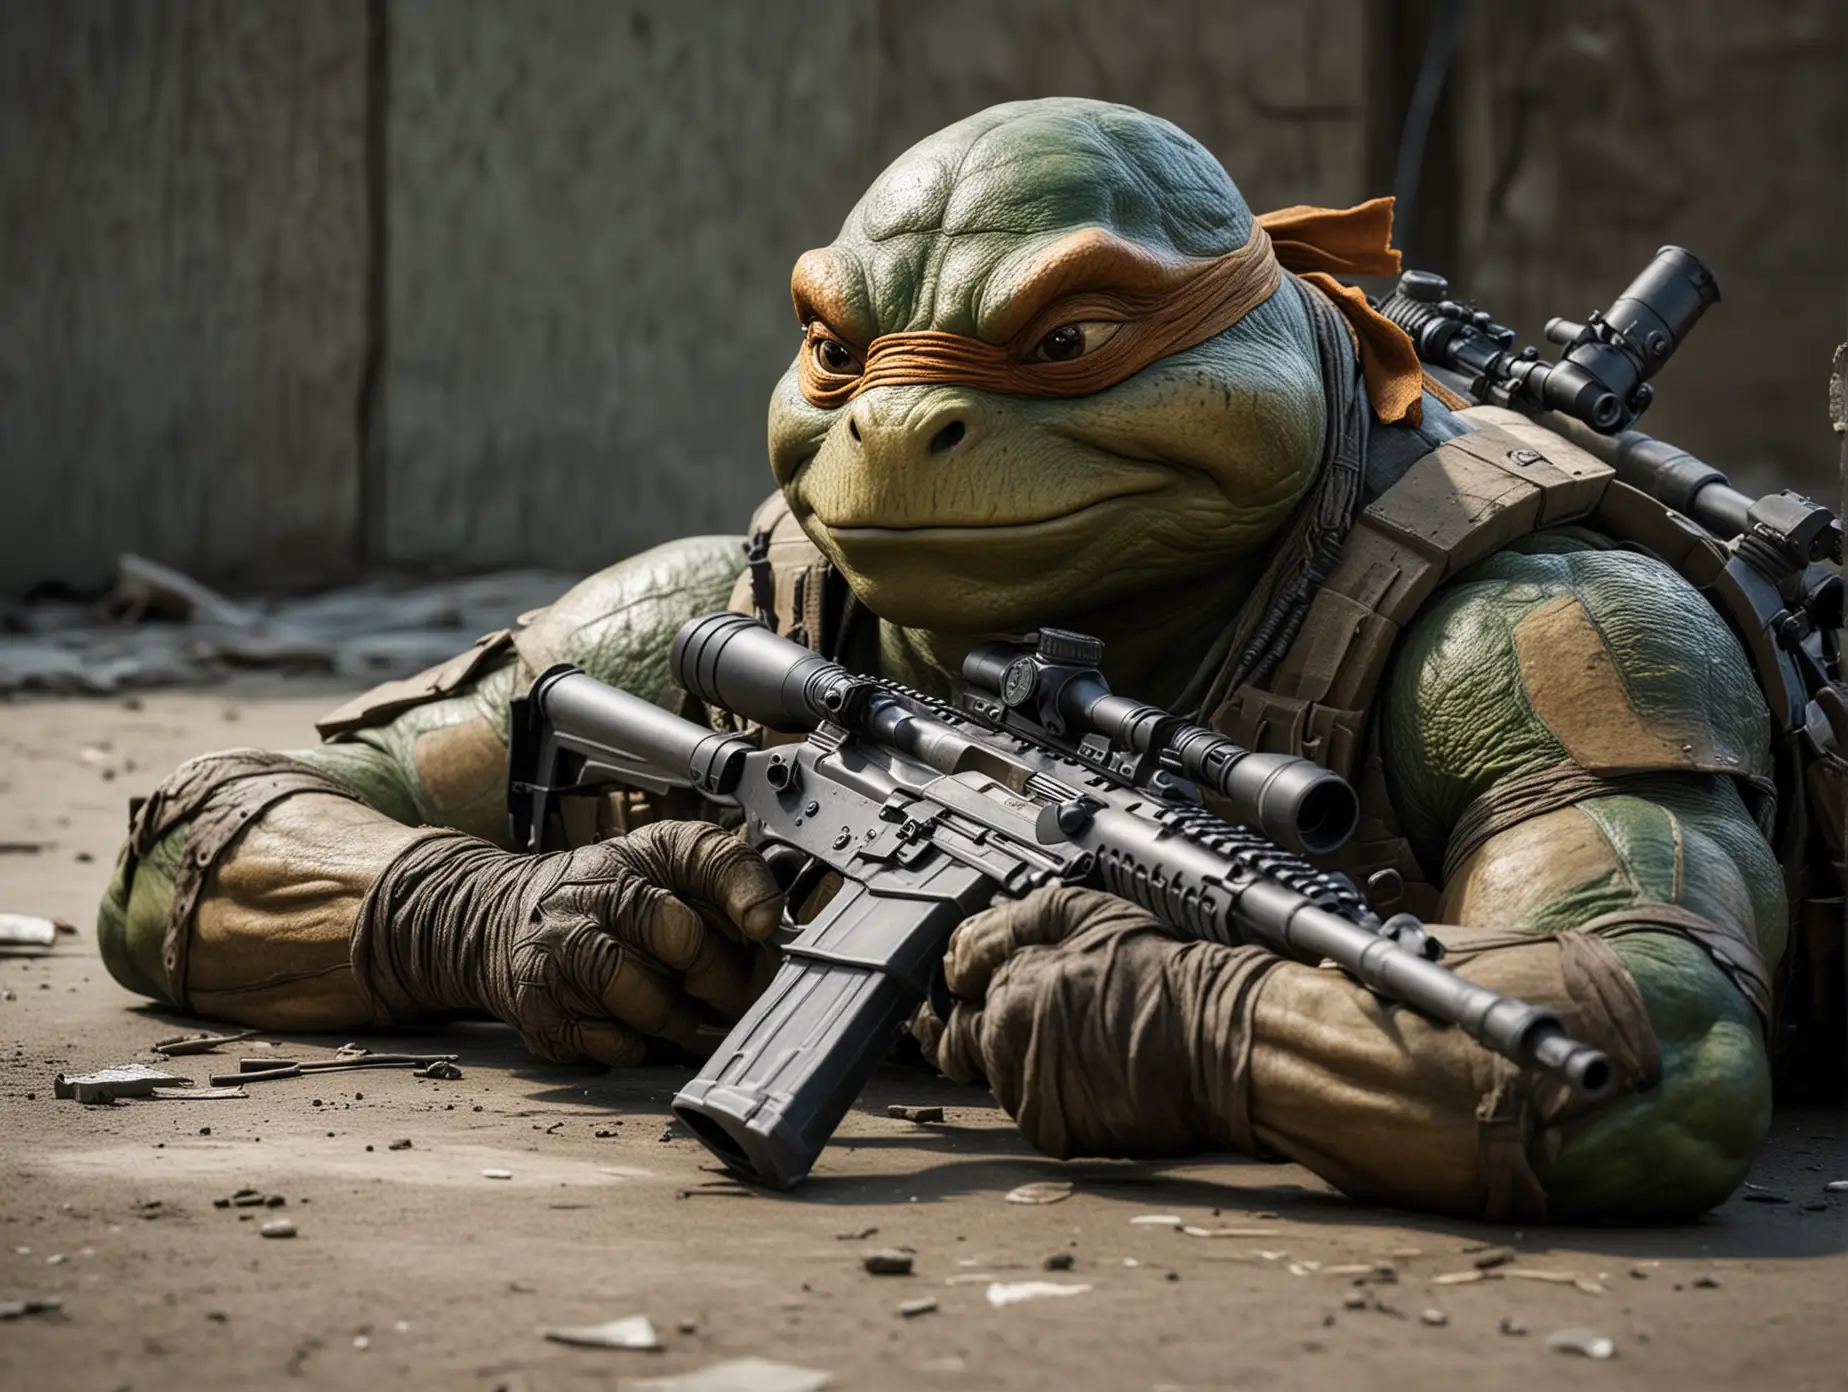 Leonardo the Ninja Turtle lying prone behind a sniper rifle. Dark, gritty. Ghilli suit